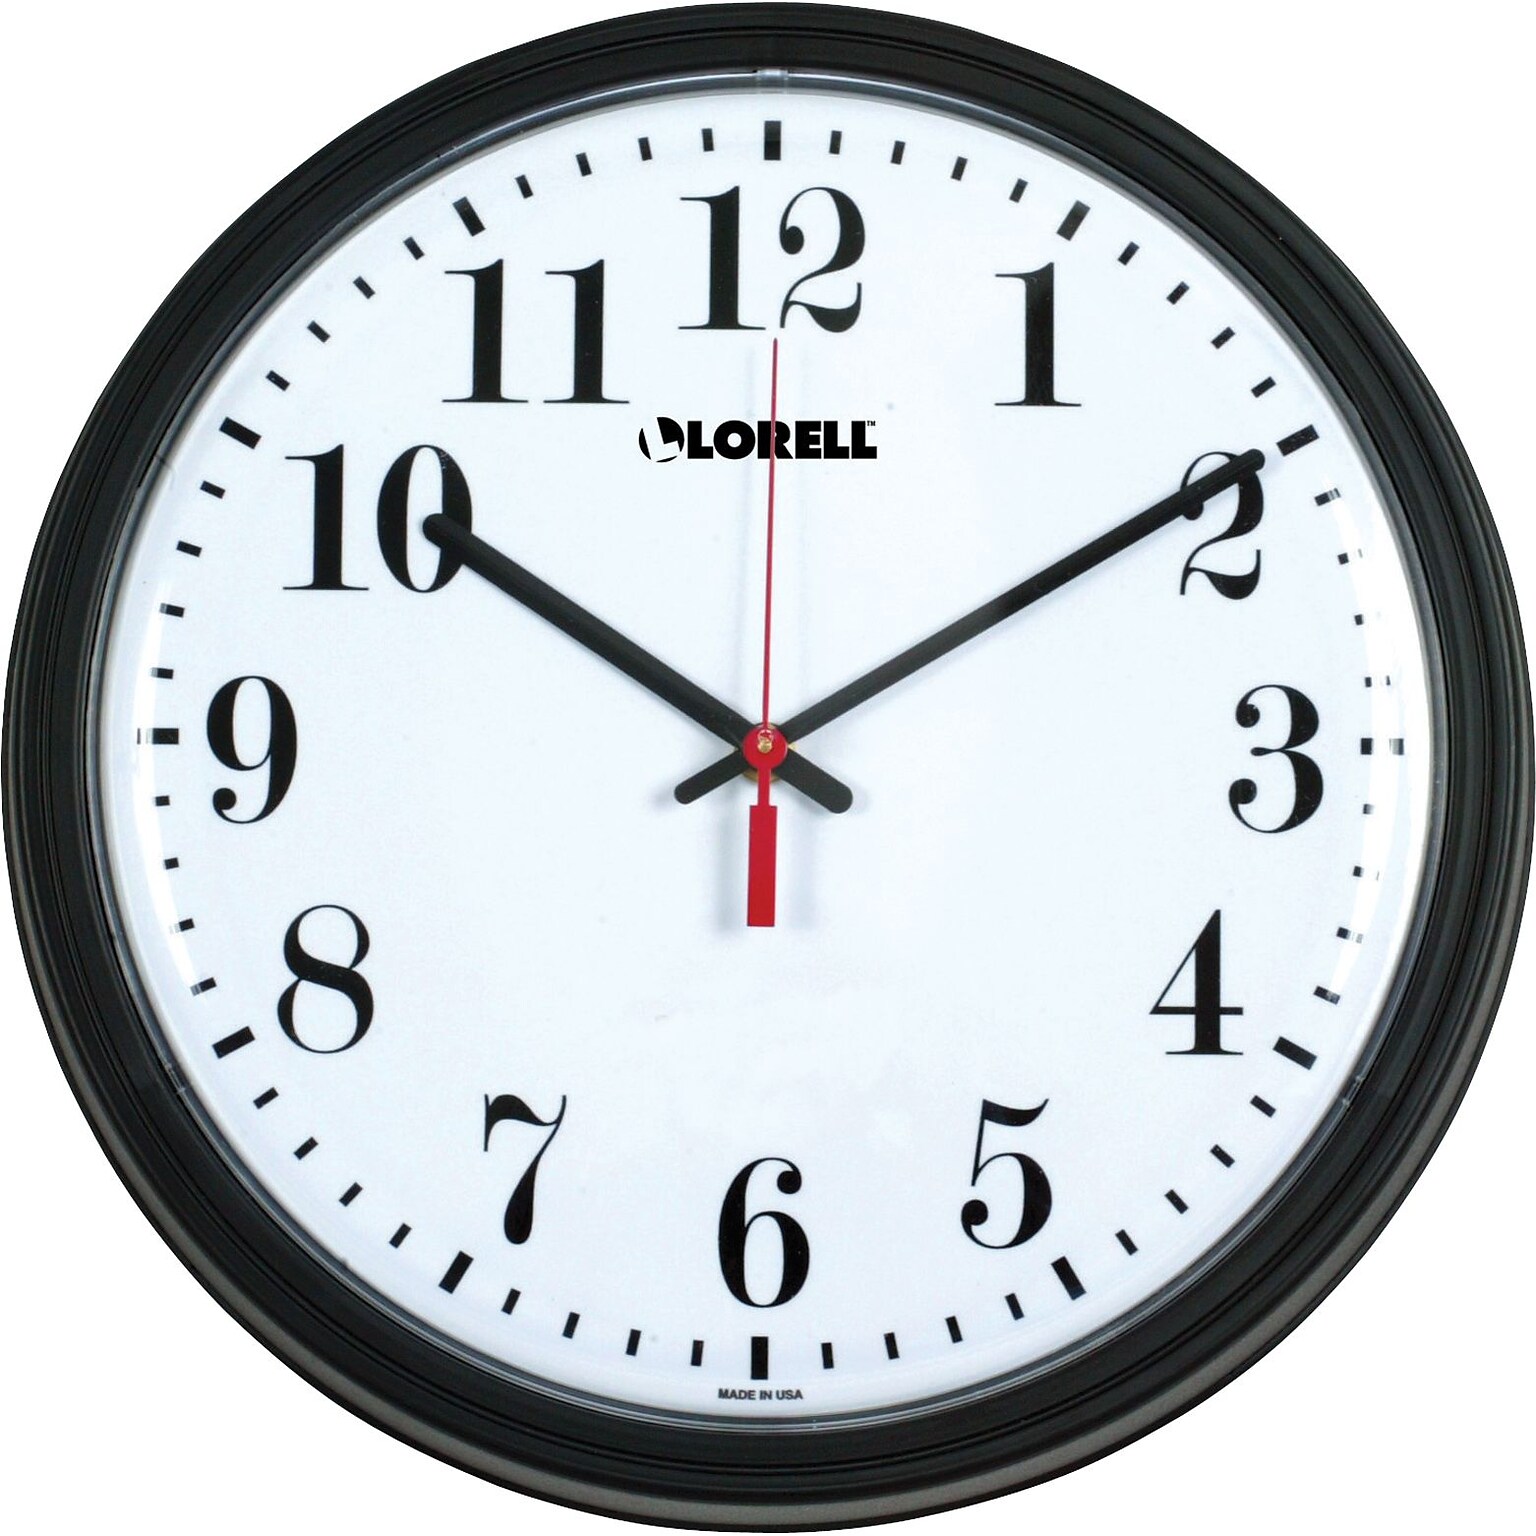 Lorell Wall Clock, Black, 13.25